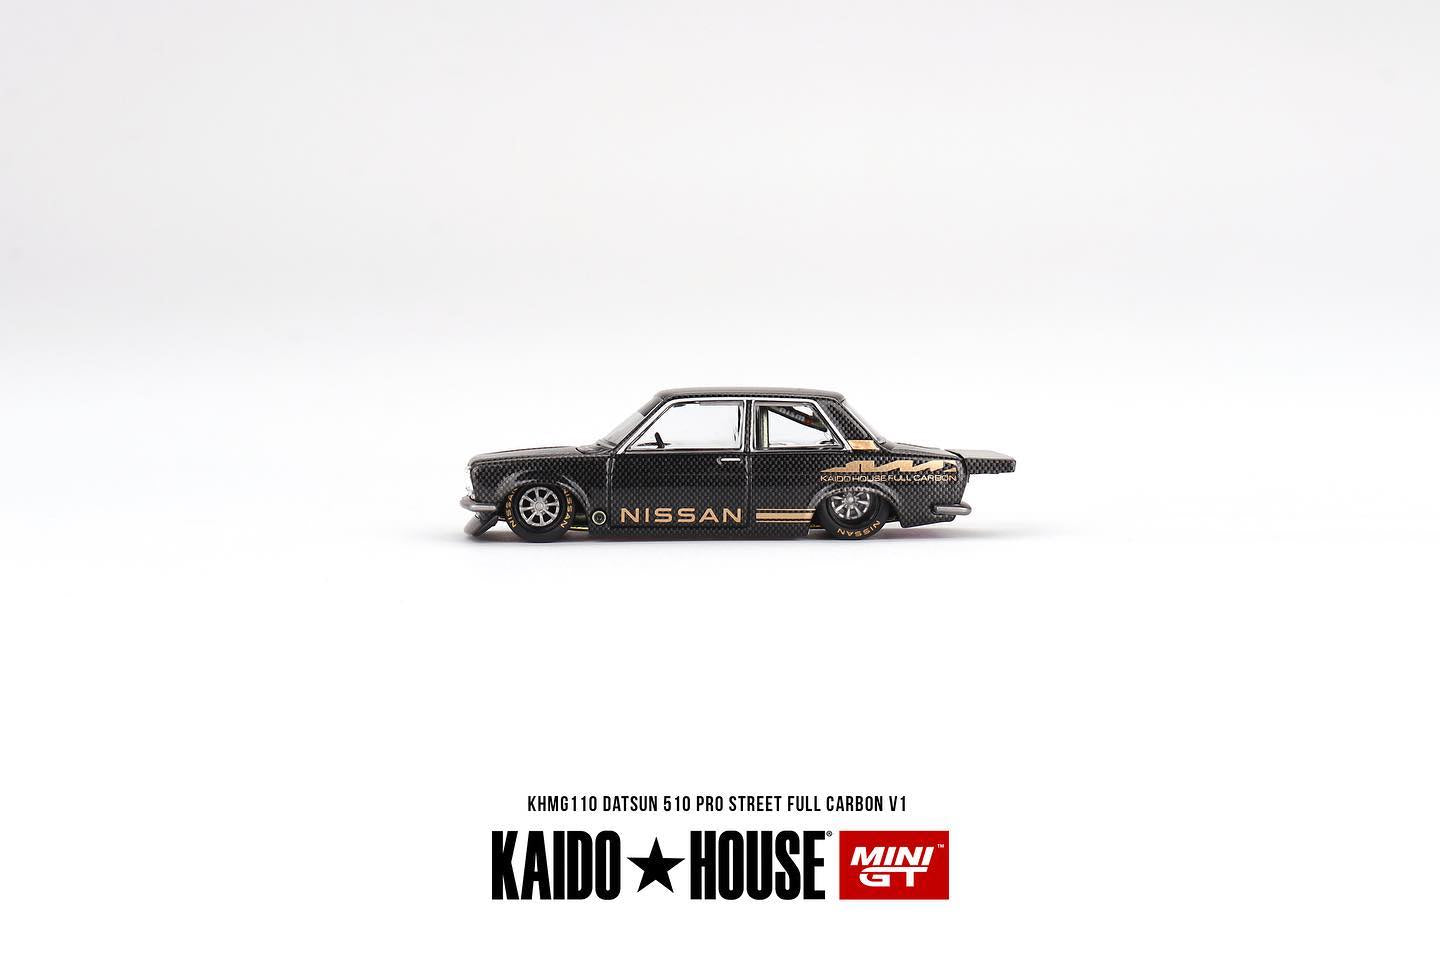 Mini GT x Kaido House Datsun 510 Pro Street Full Carbon V1